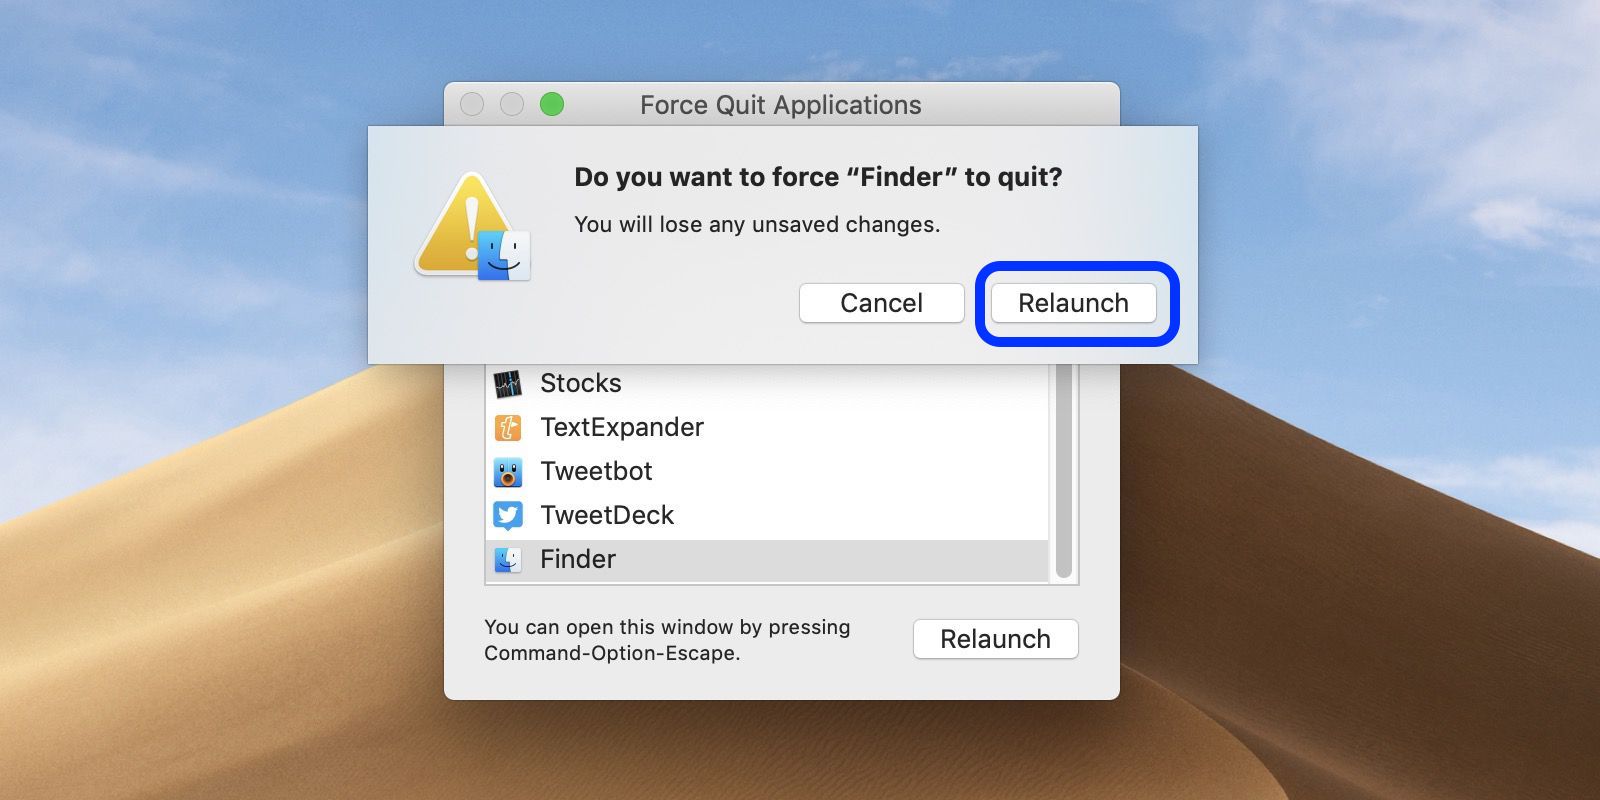 mac restart clear cache